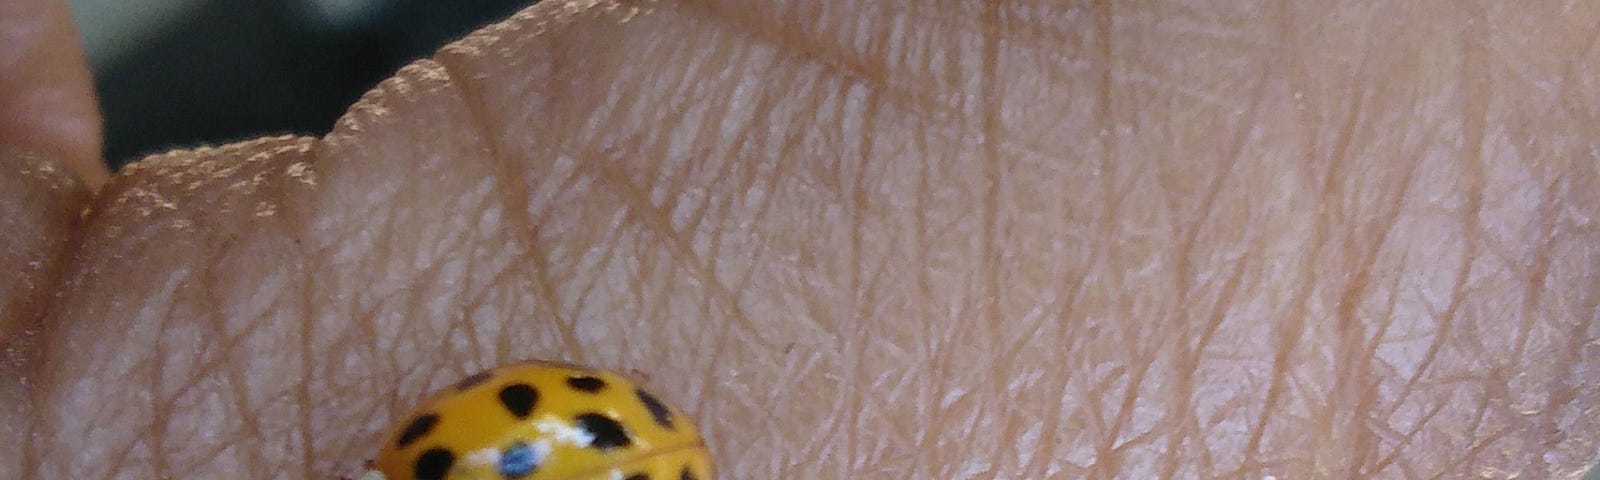 a little yellow ladybug on my finger